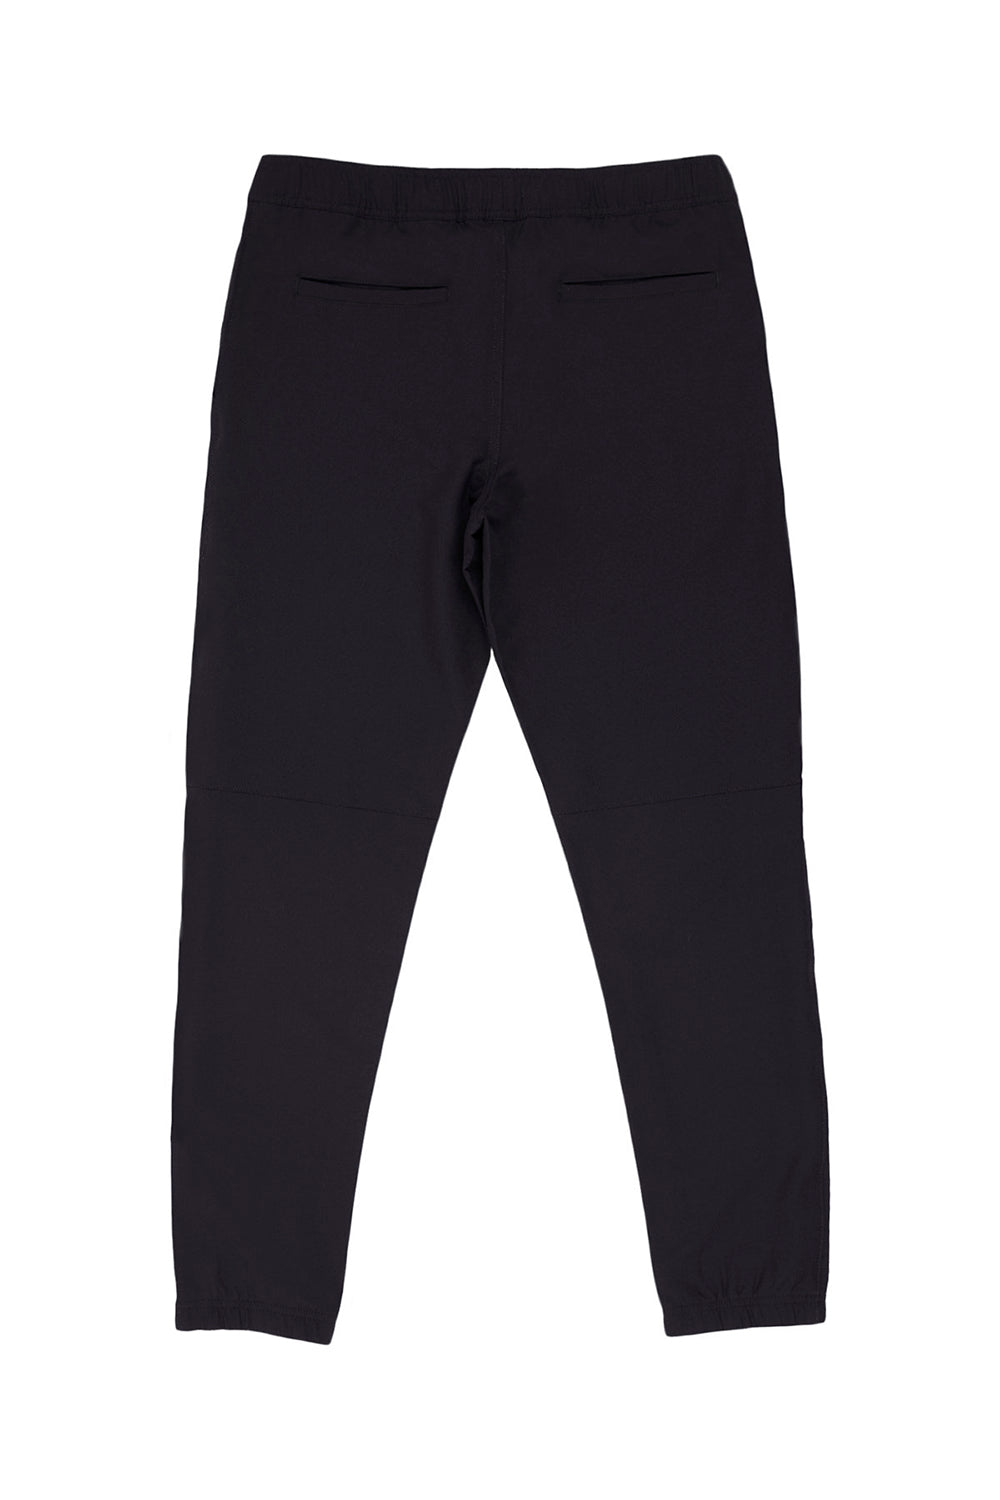 Burnside B8888 Mens Perfect Jogger Sweatpants w/ Zipper Pocket Black Flat Back